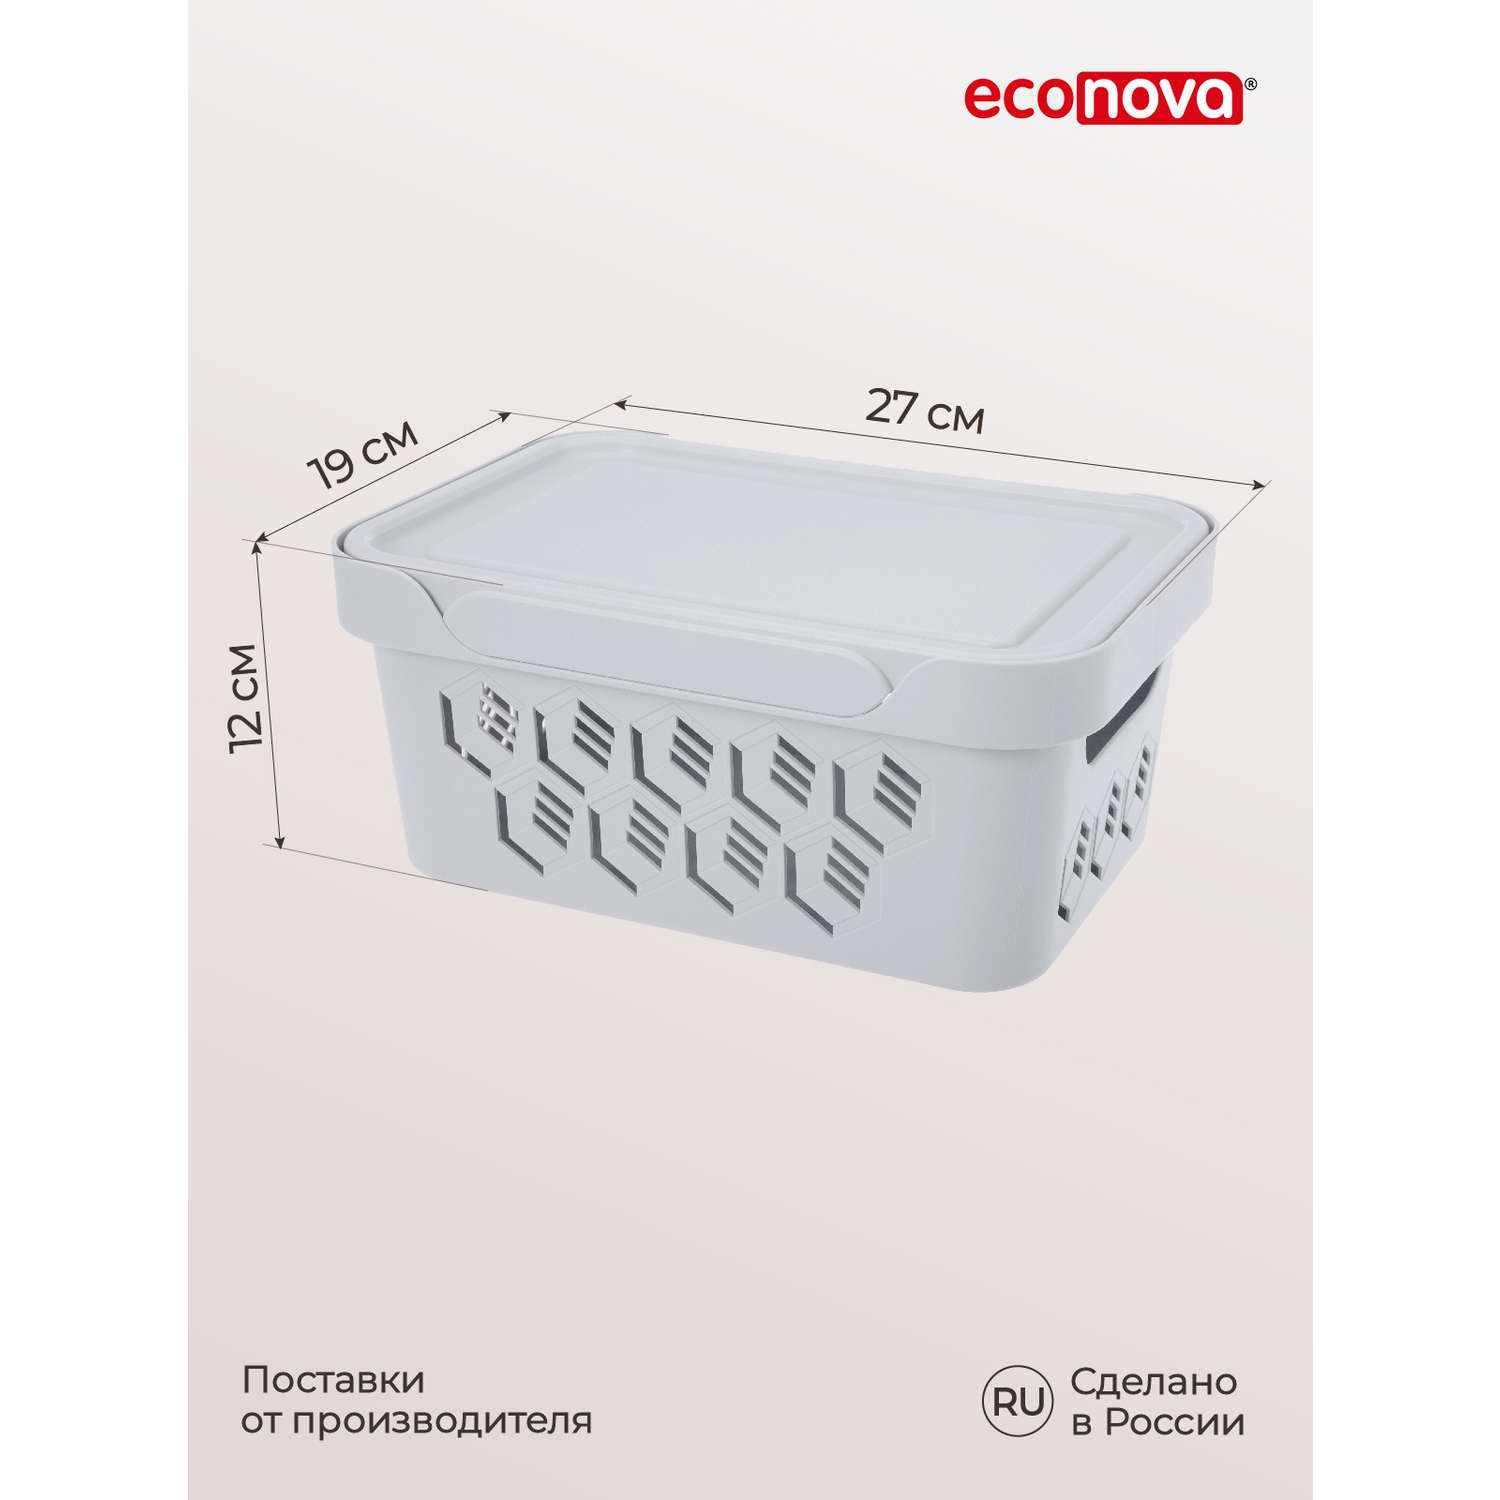 Коробка Econova с крышкой DELUXE 4.6Л светло-серая - фото 2